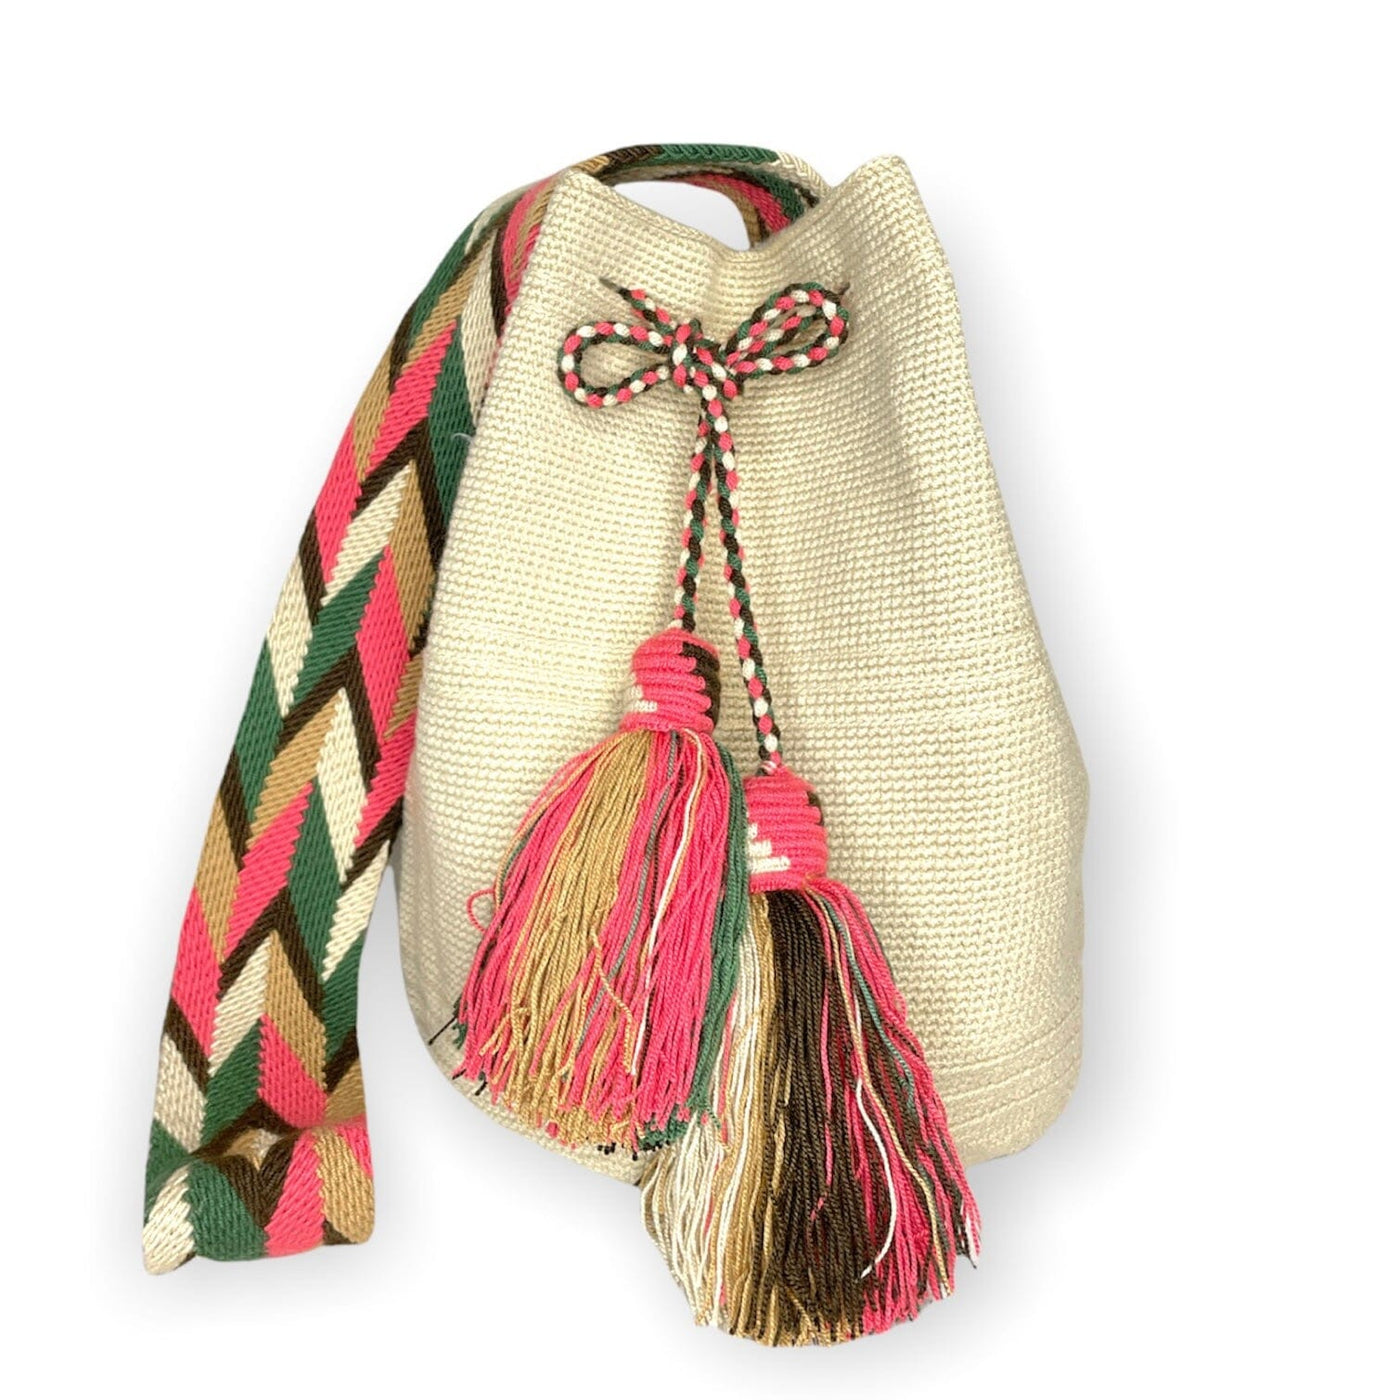 Beige Crochet Bag | Crossbody Bohemian Bag | Traditional Wayuu Bags Colorful 4U